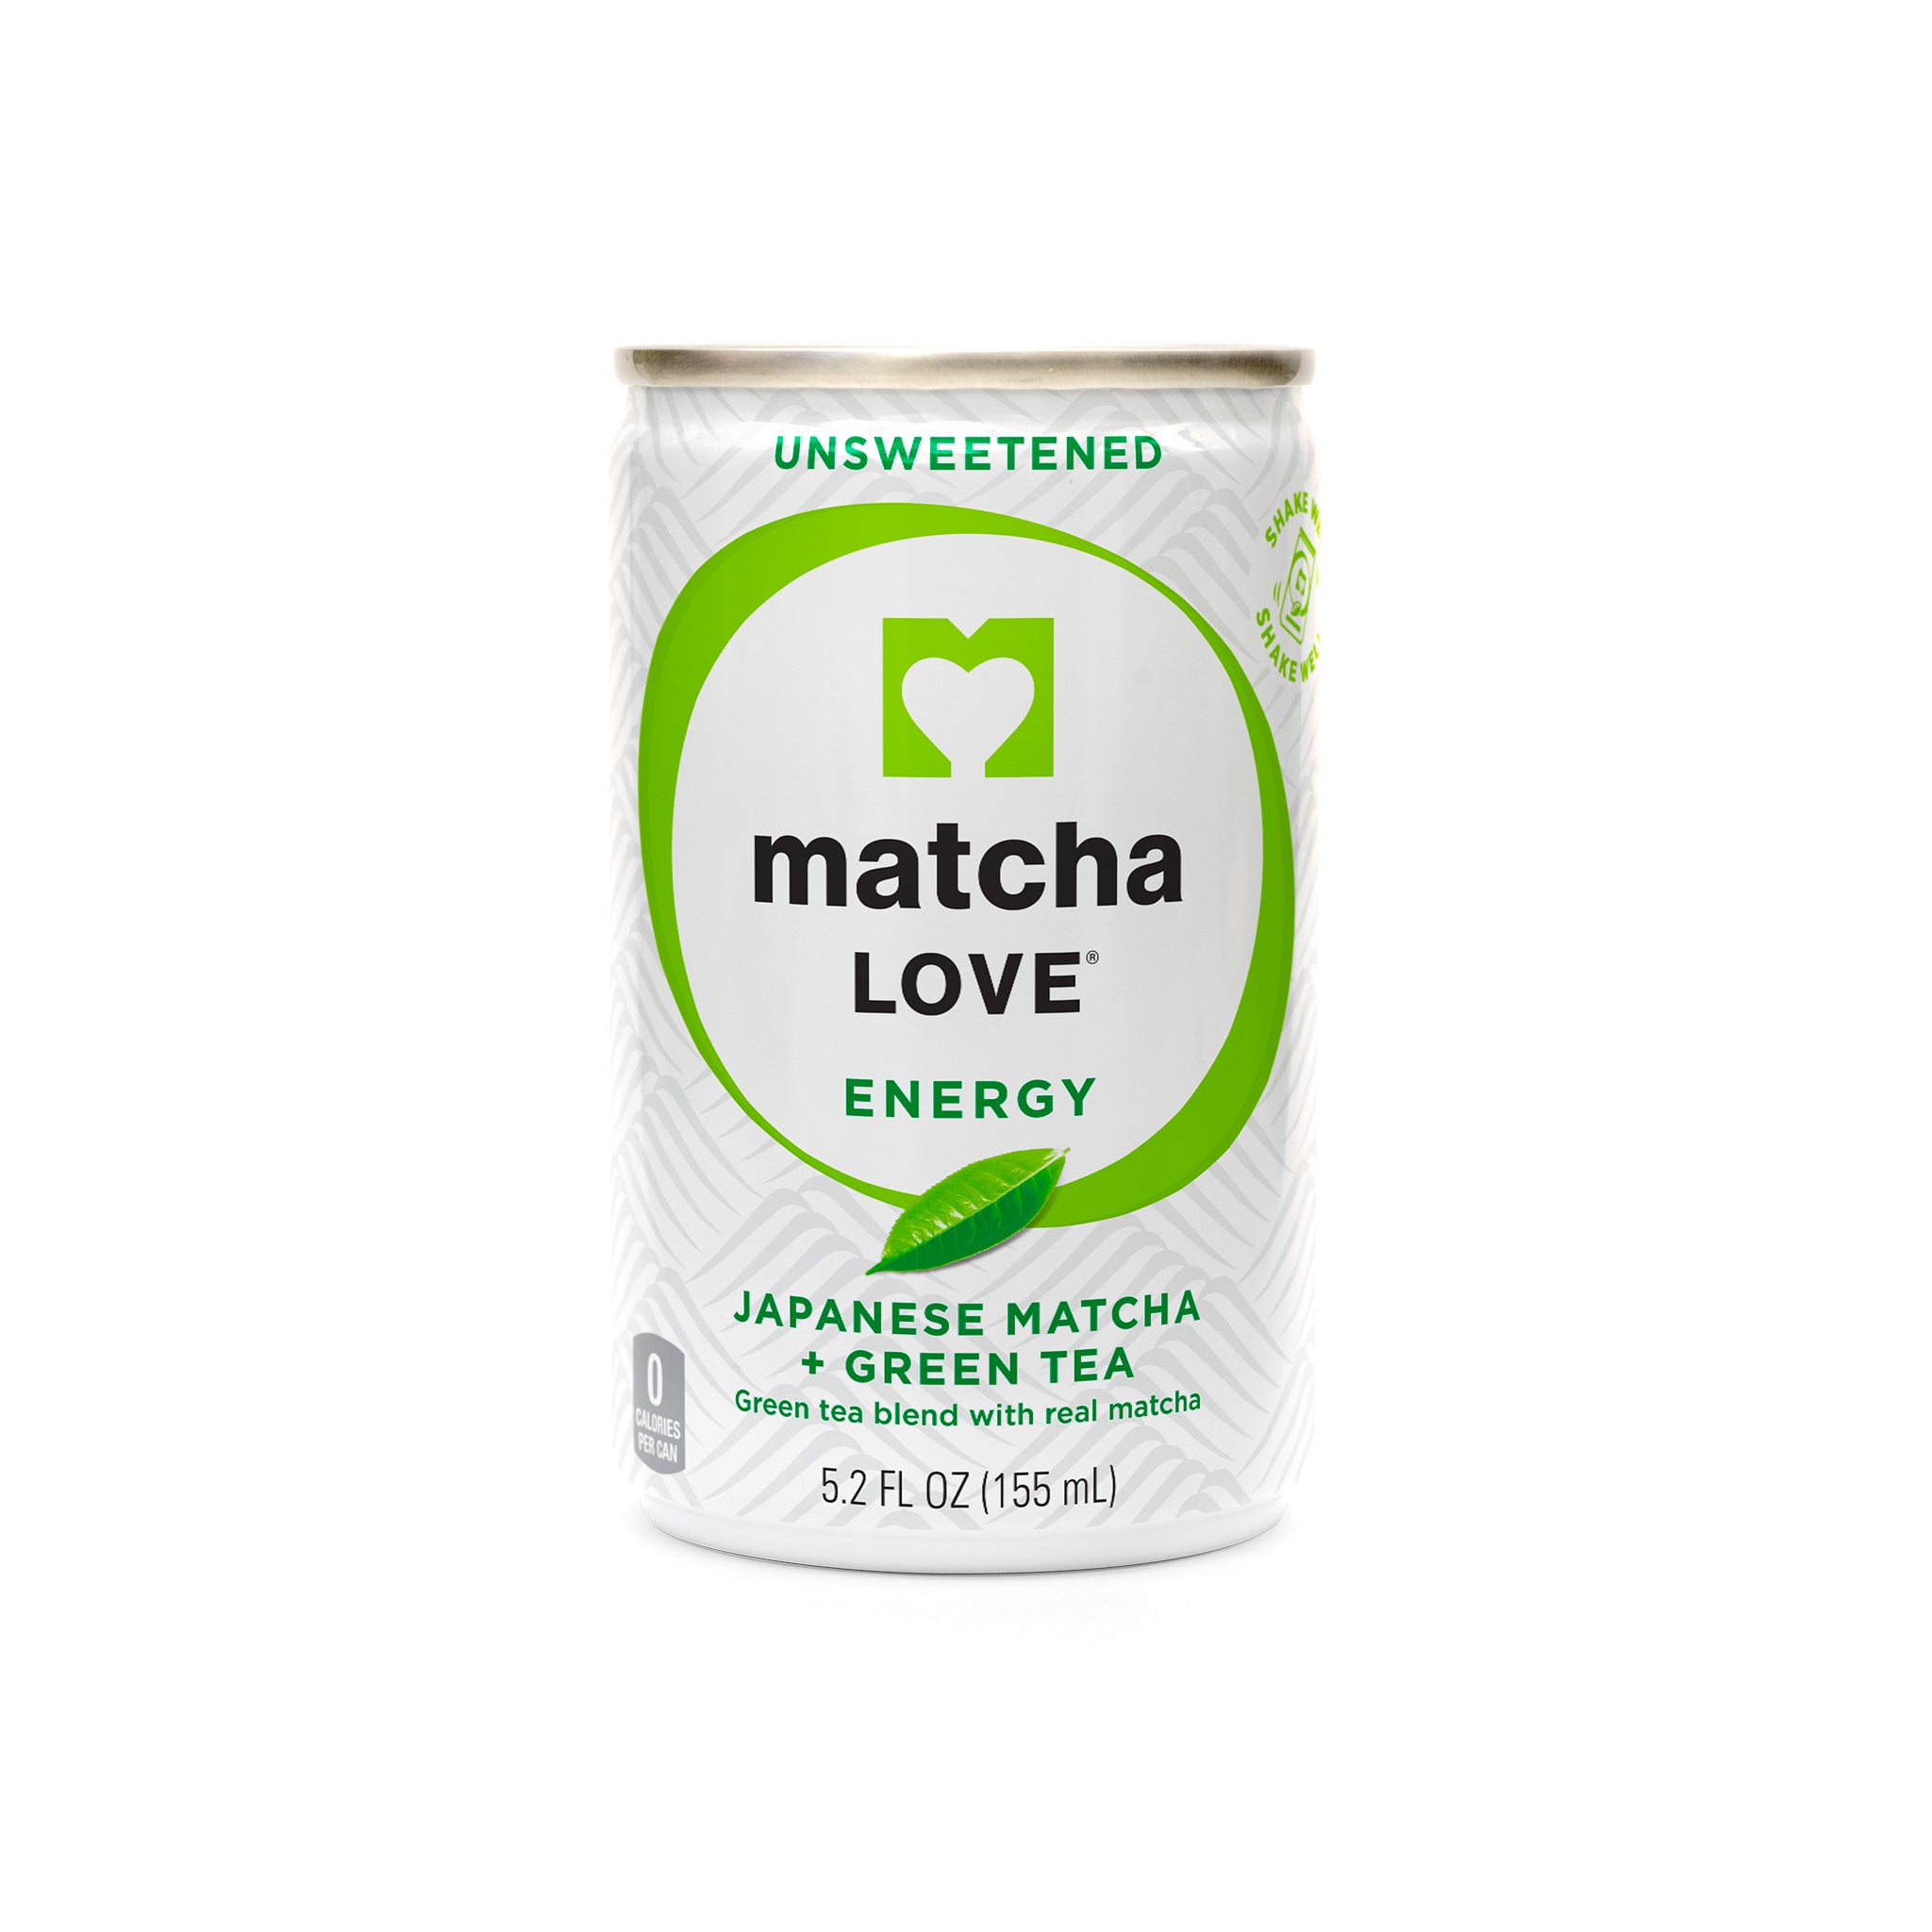 Unsweetened Japanese Matcha + Green Tea Energy Shot